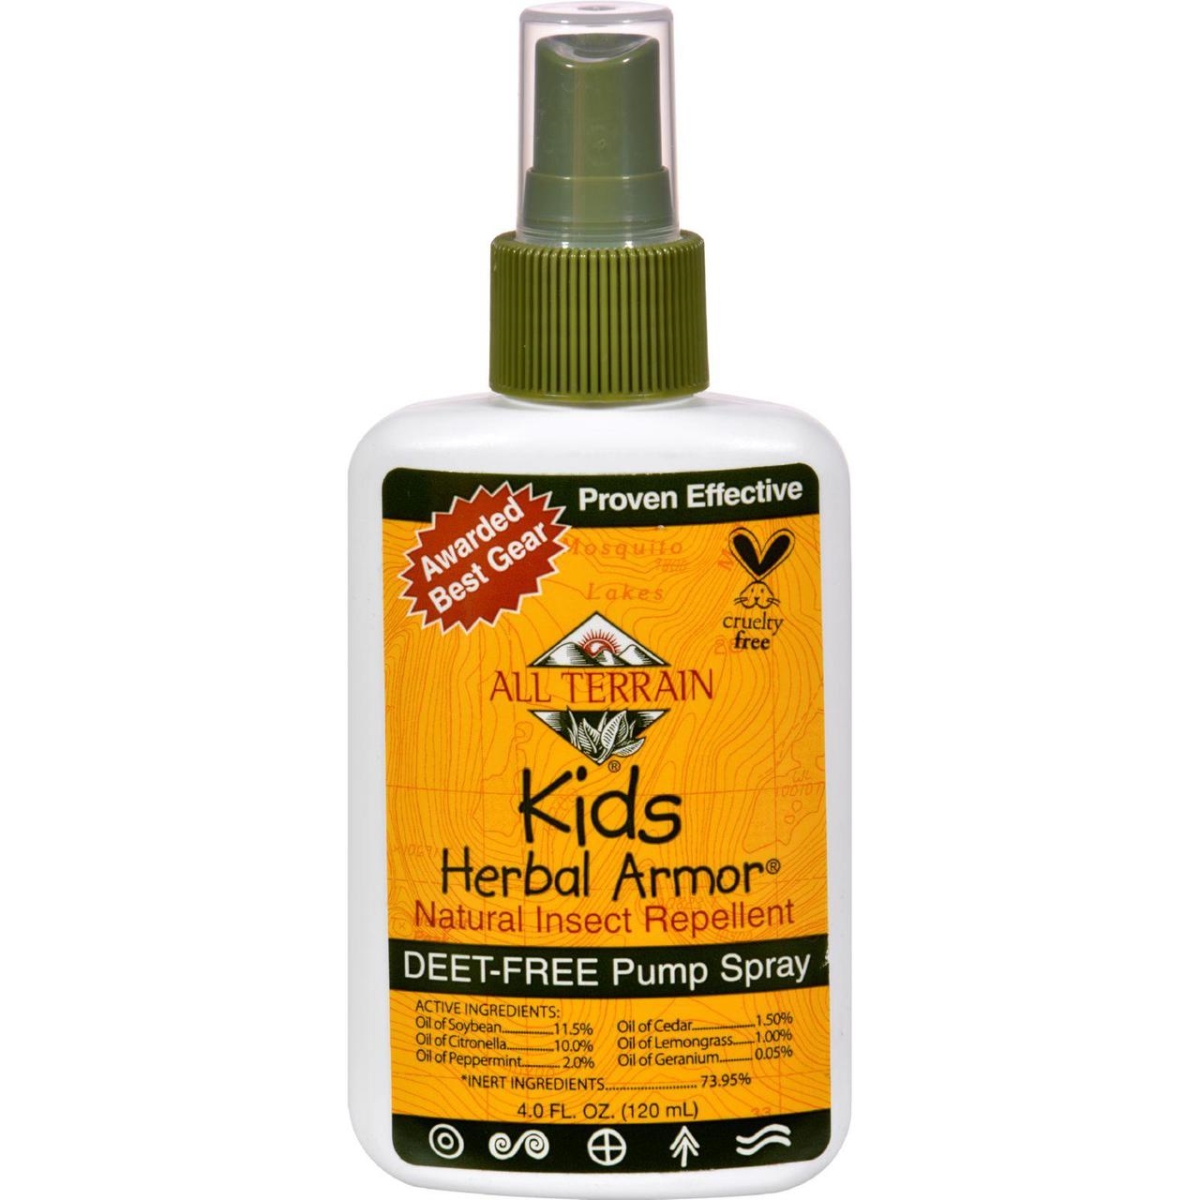 Hg0285833 4 Oz Herbal Armor Spray For Kids